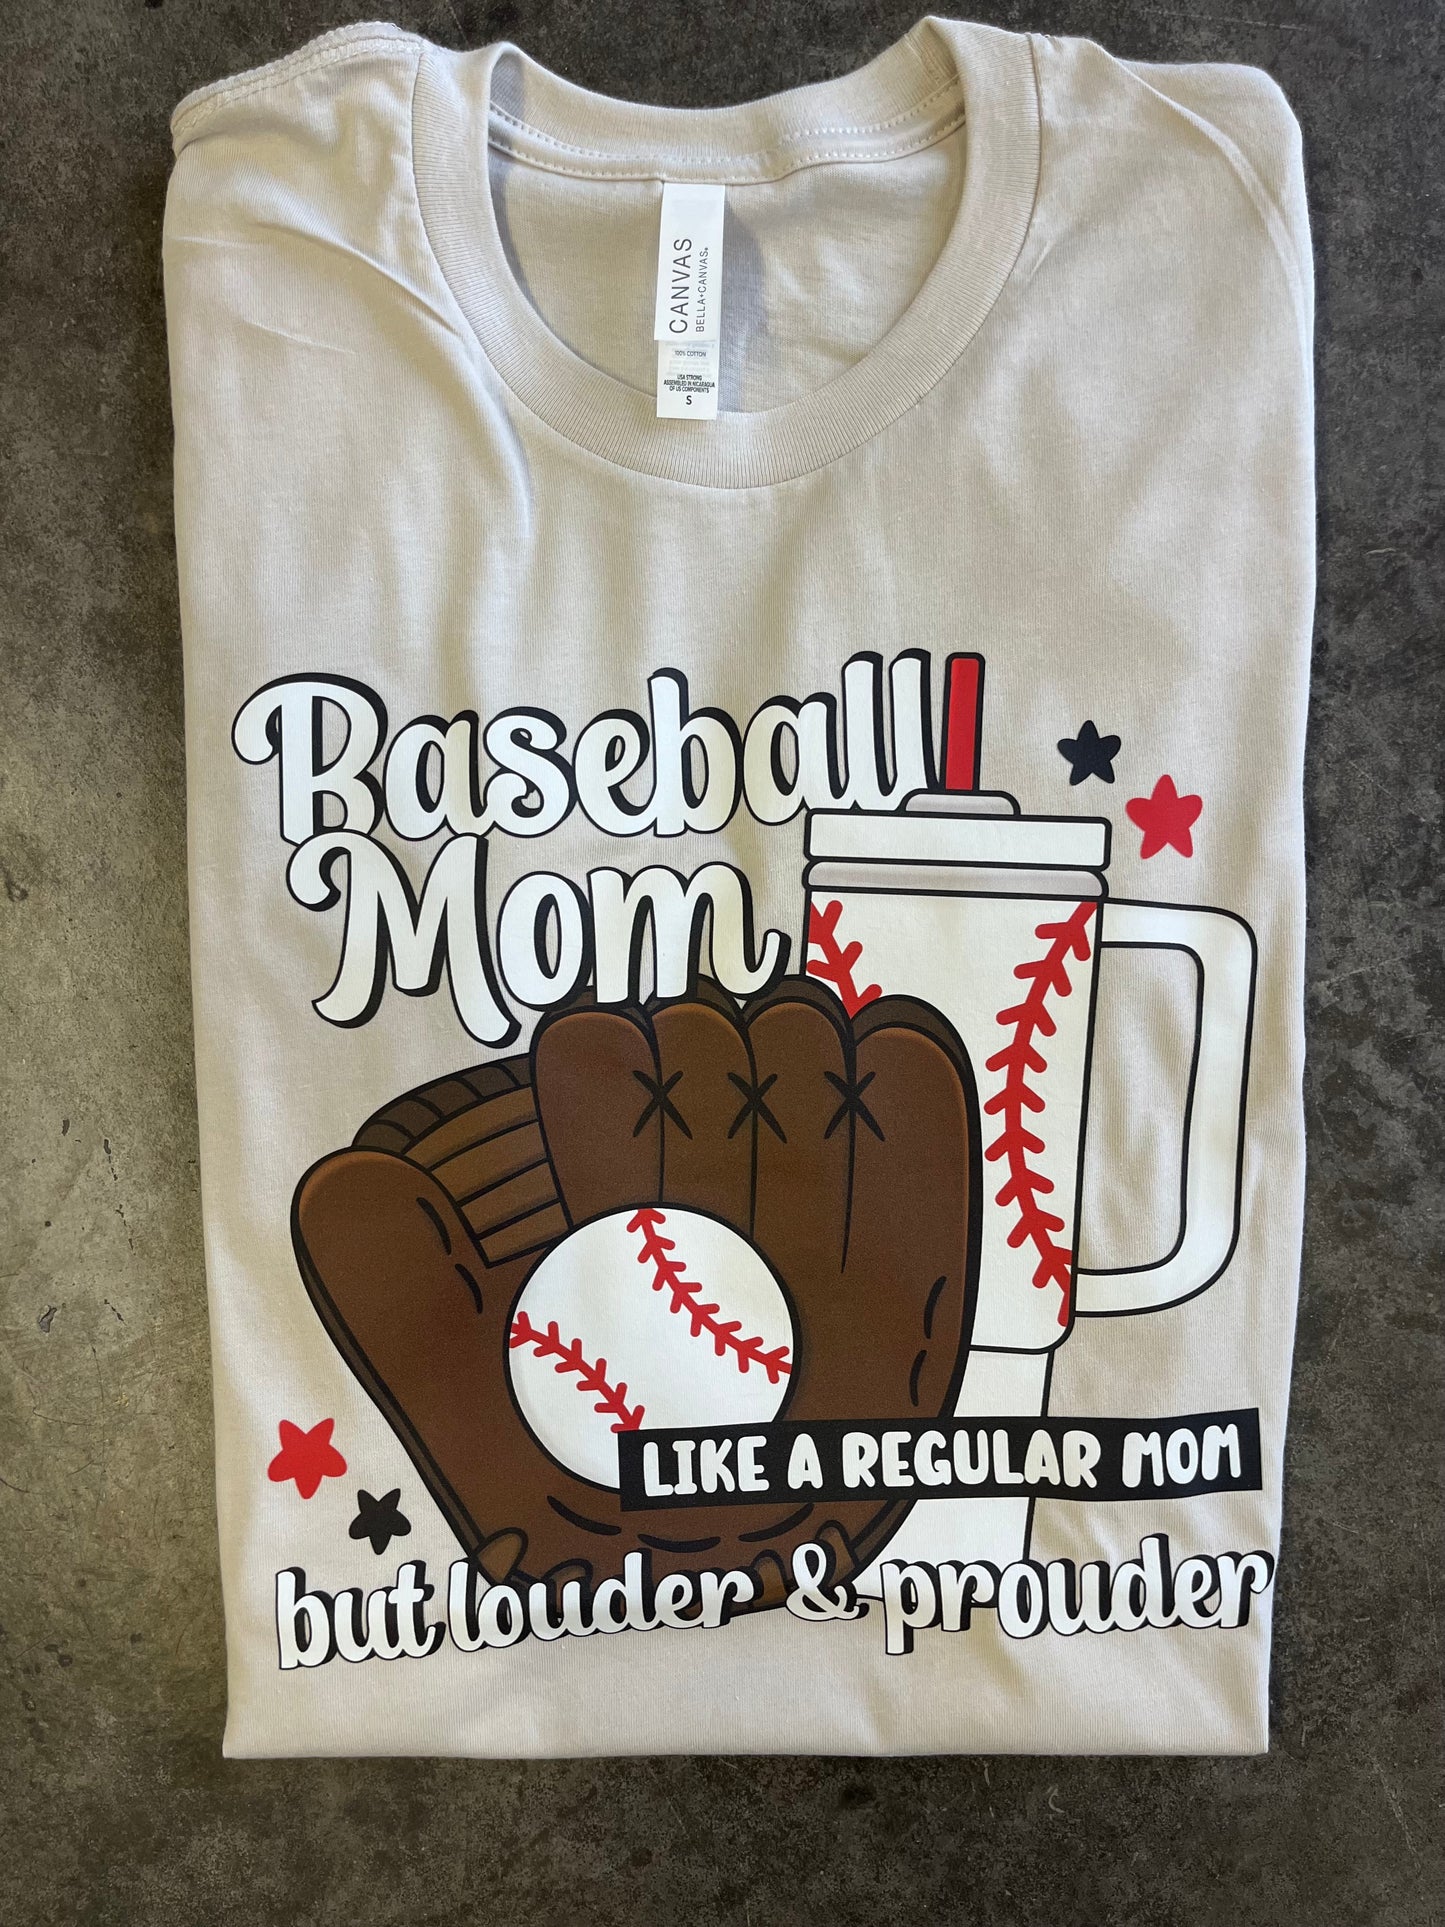 “Baseball Mom” Tee